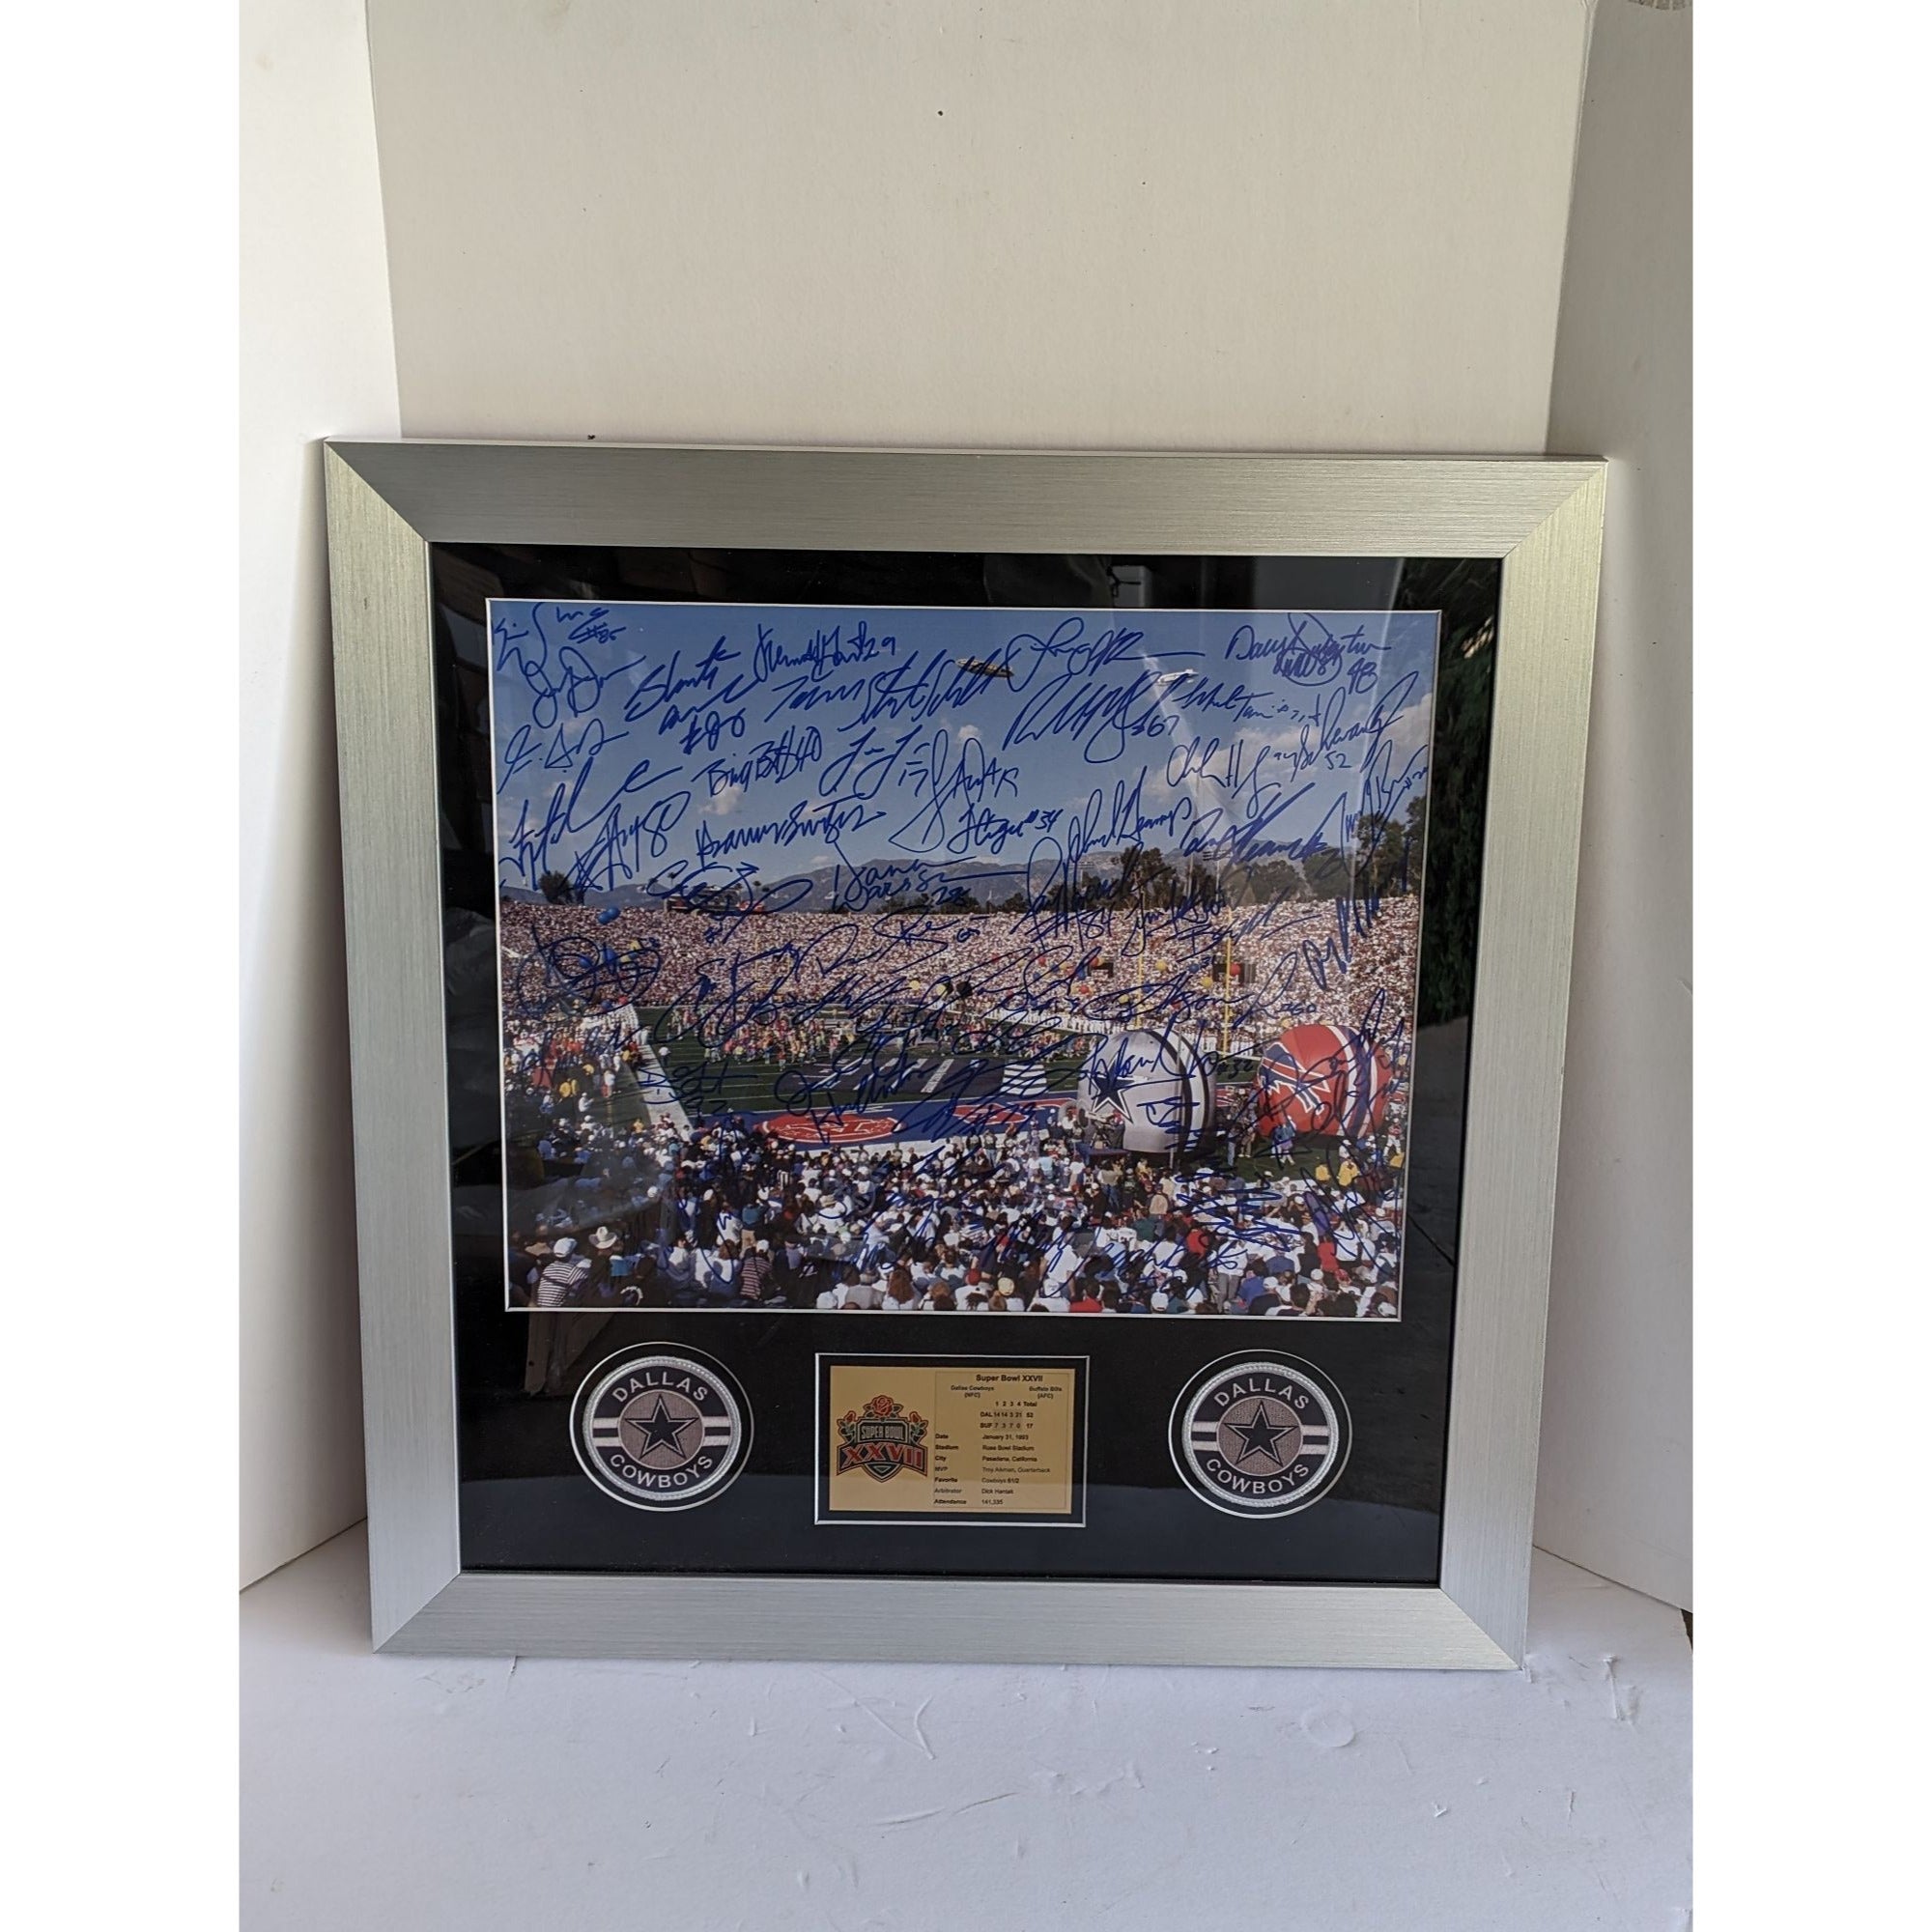 Emmitt Smith Troy Aikman Michael Irvin 1992 1993 Super Bowl champions team sign 16x20 photo framed